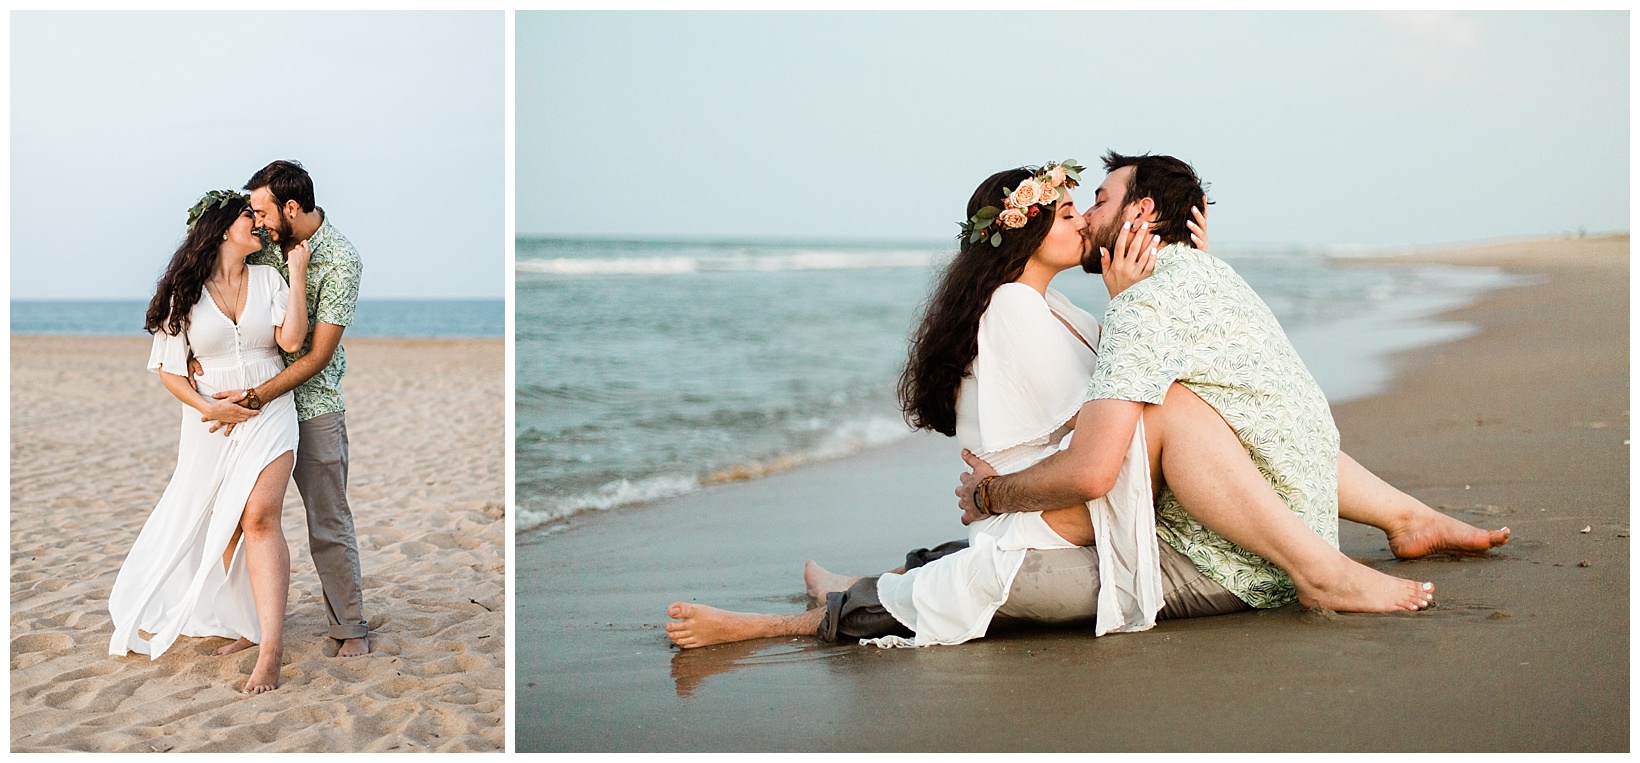 Virginia beachy indie elopement wedding photographer couple inspiration in the ocean